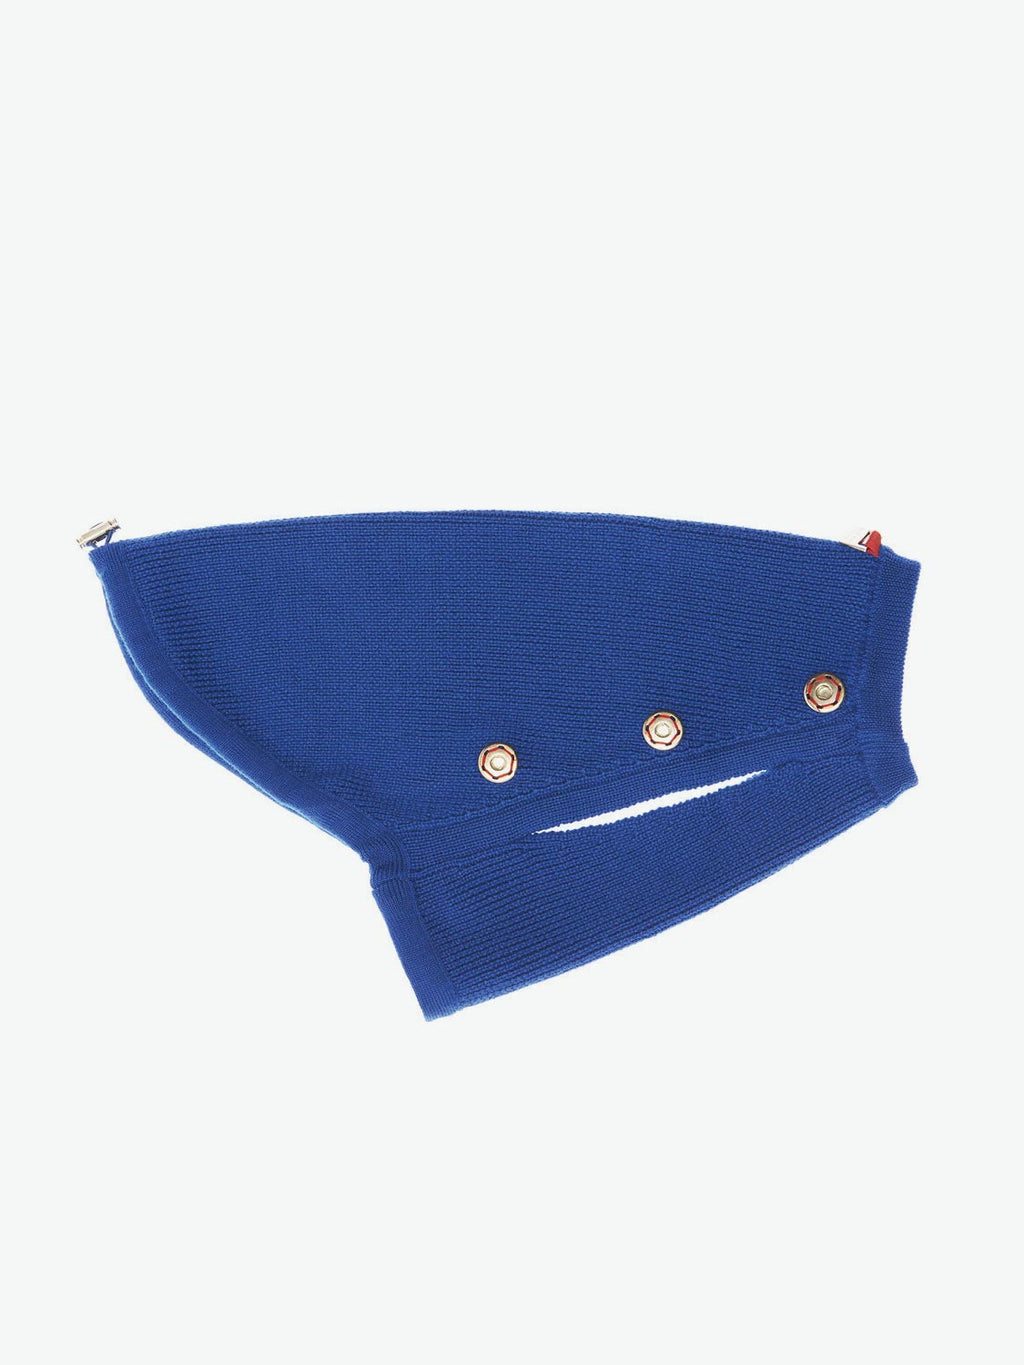 Poldo Dog Couture Reversible Coat Blue